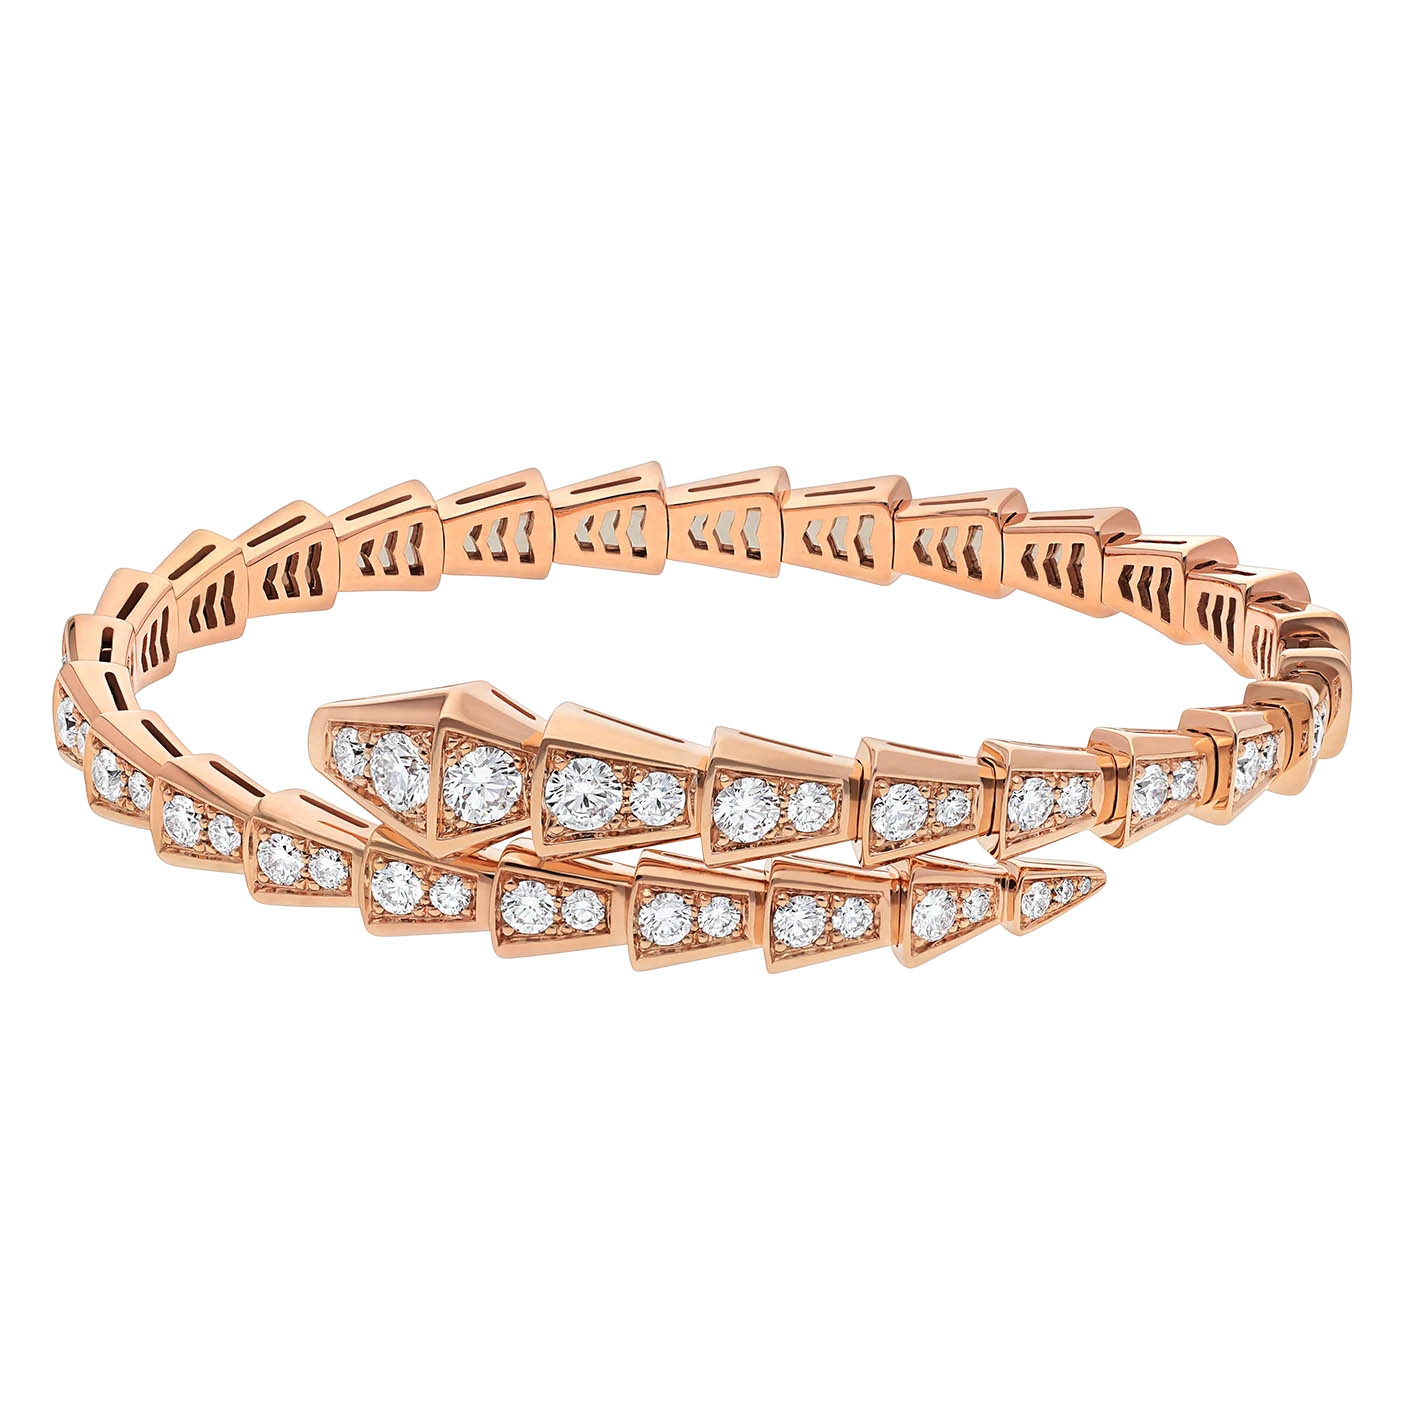 Wholesale Custom design OEM/ODM Jewelry one-coil thin bracelet in 18K rose gold and full pavé diamonds OEM jewelry service